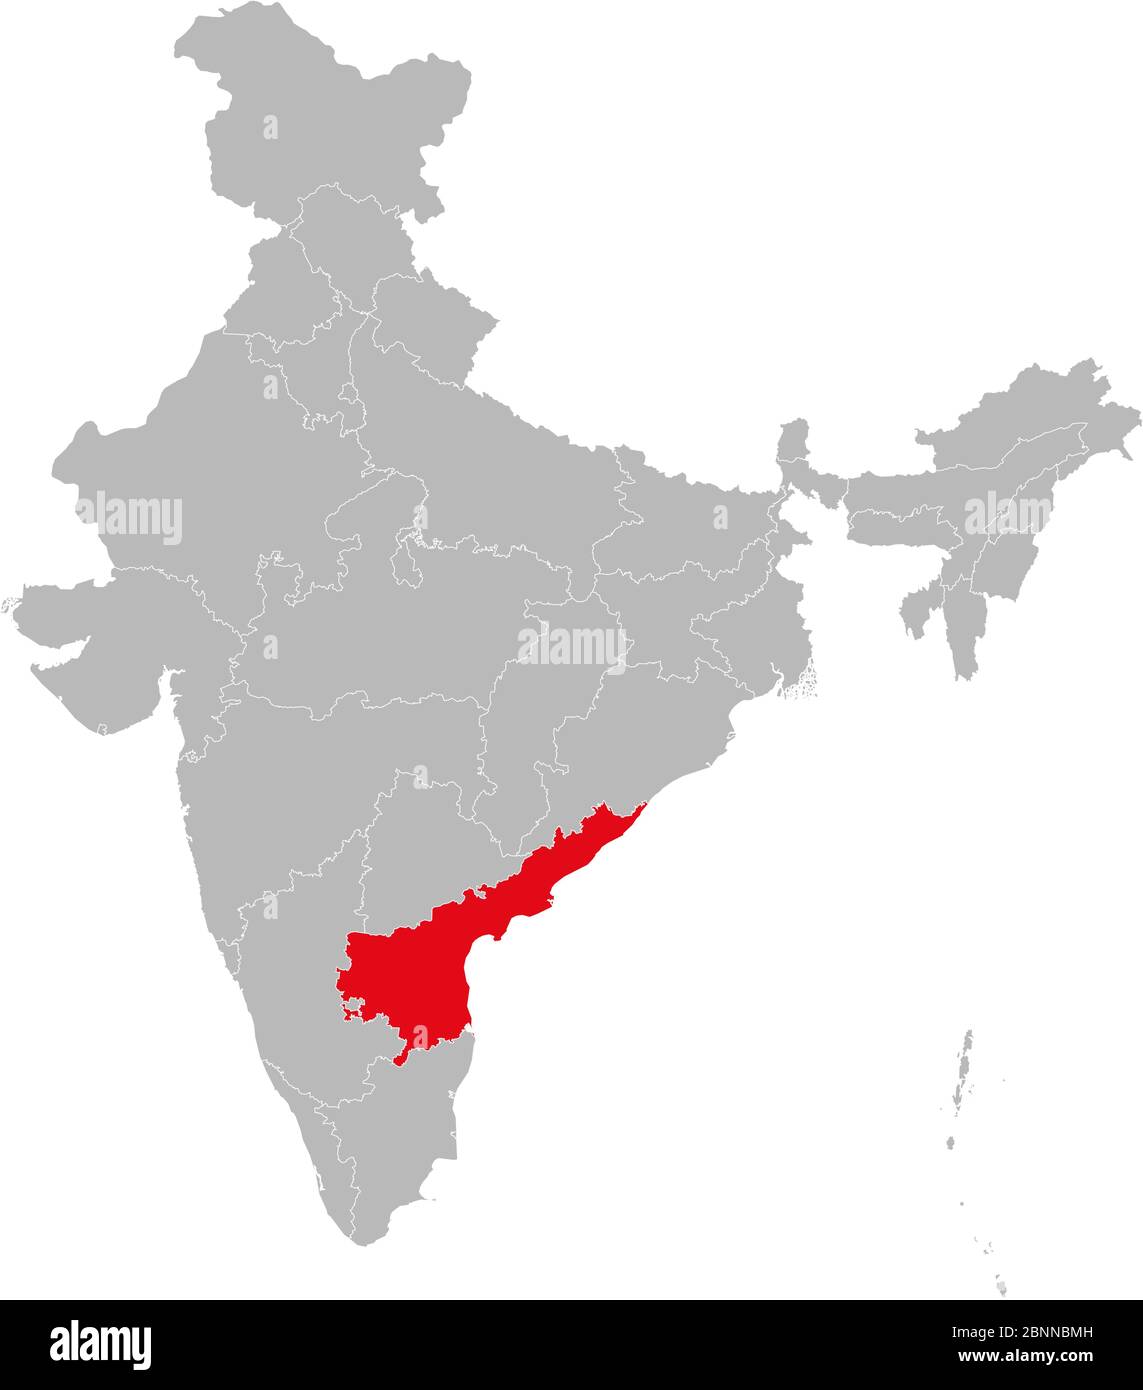 Carte politique de l'Inde mettant en évidence l'illustration du vecteur andhra pradesh. Fond gris. Illustration de Vecteur